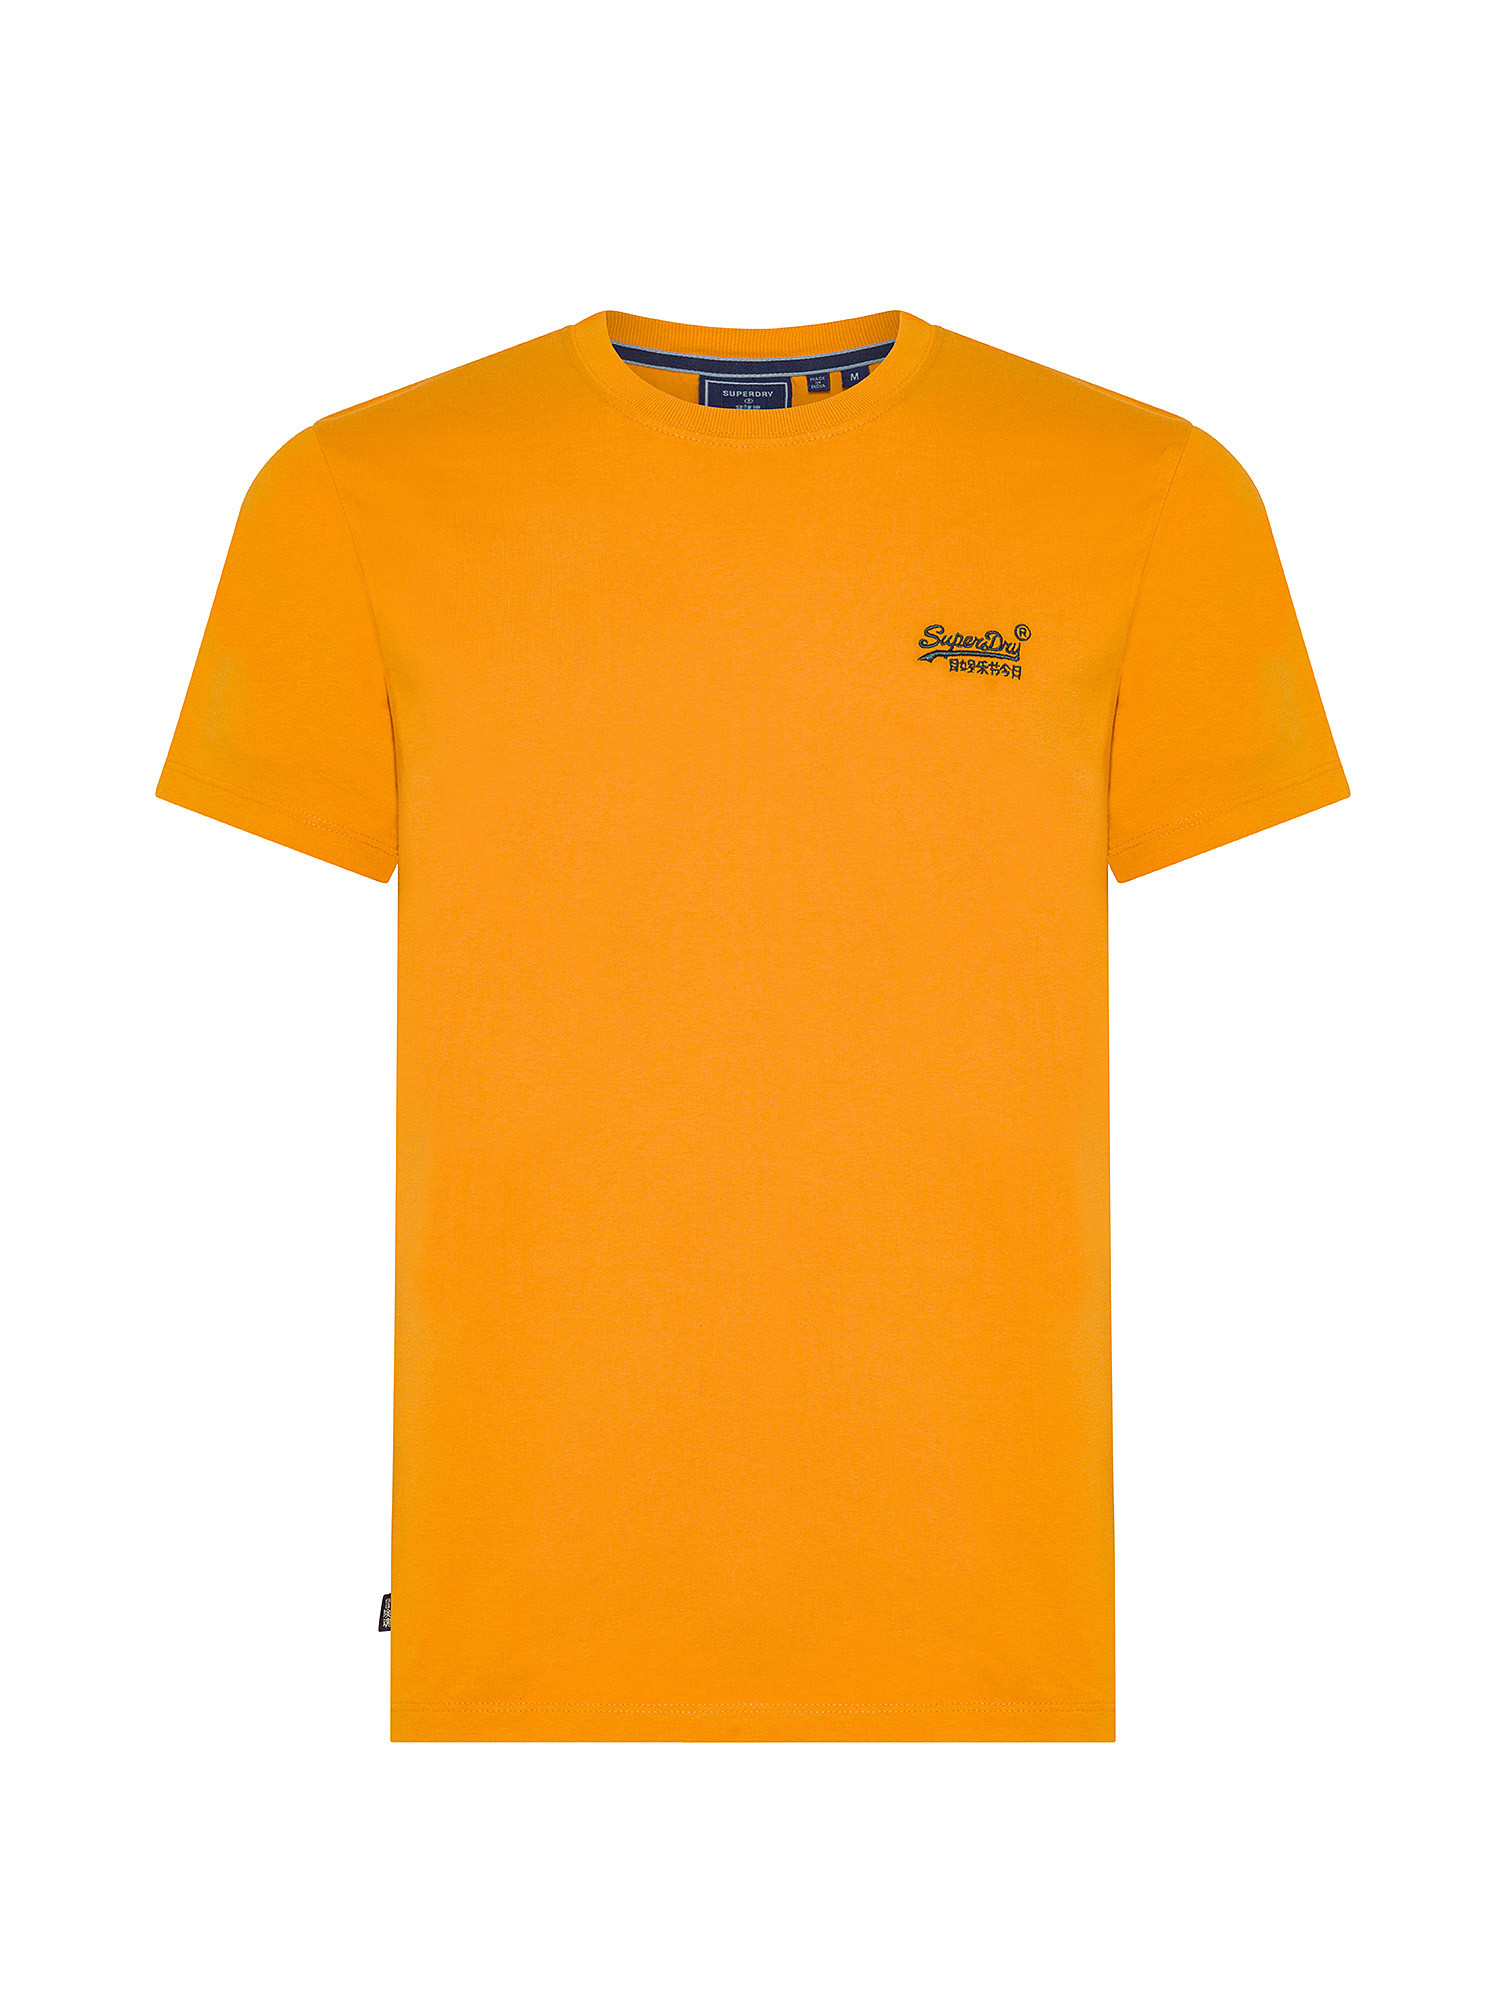 Superdry Crew Neck Logo T-Shirt, Orange, large image number 0